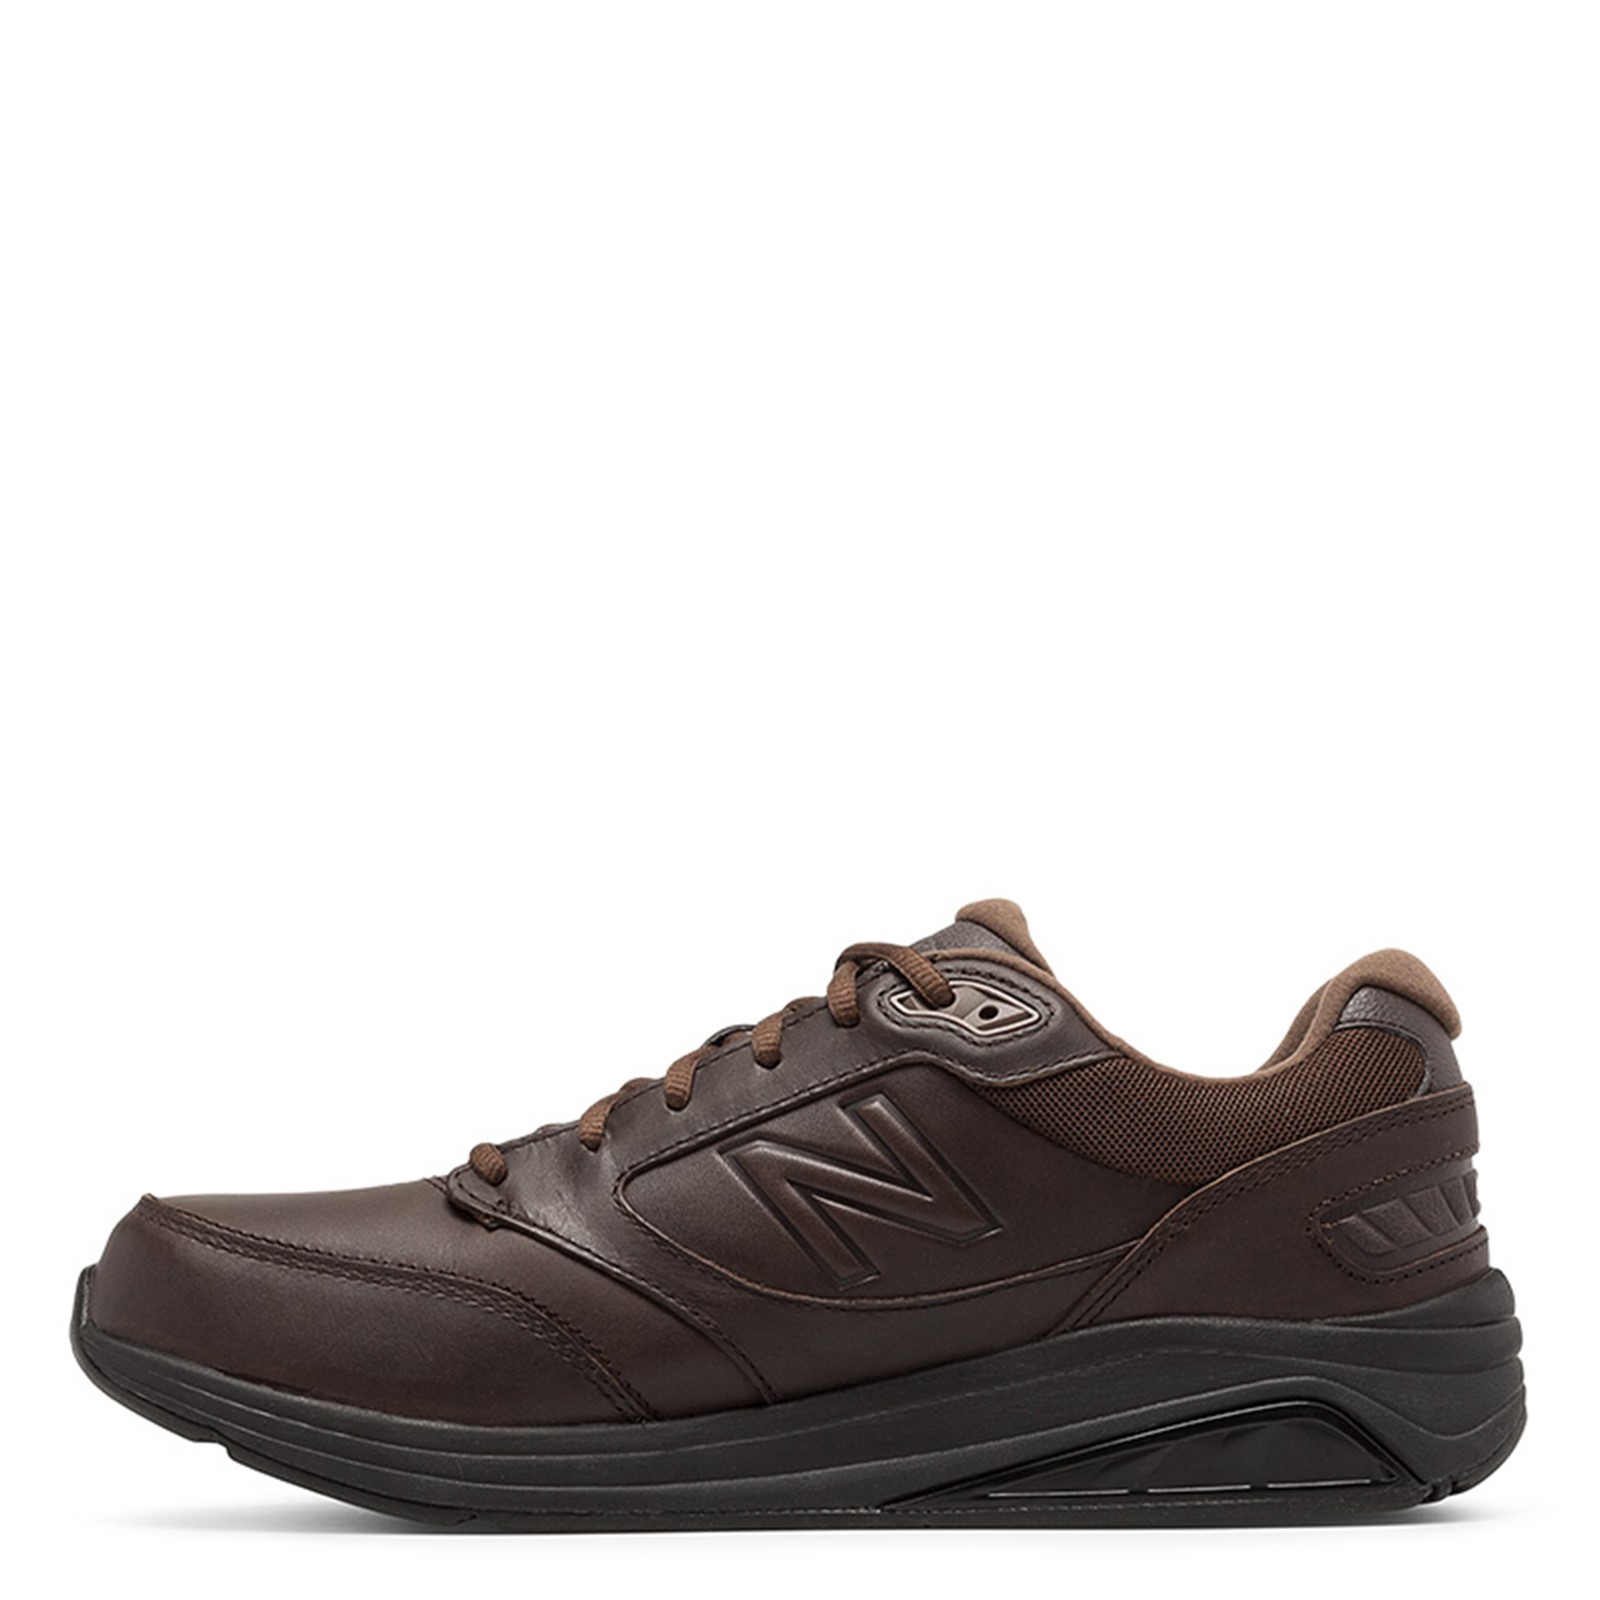 Men's New Balance, 928v3 Walking Shoe MW928BR3 Dark Brown Leather | eBay